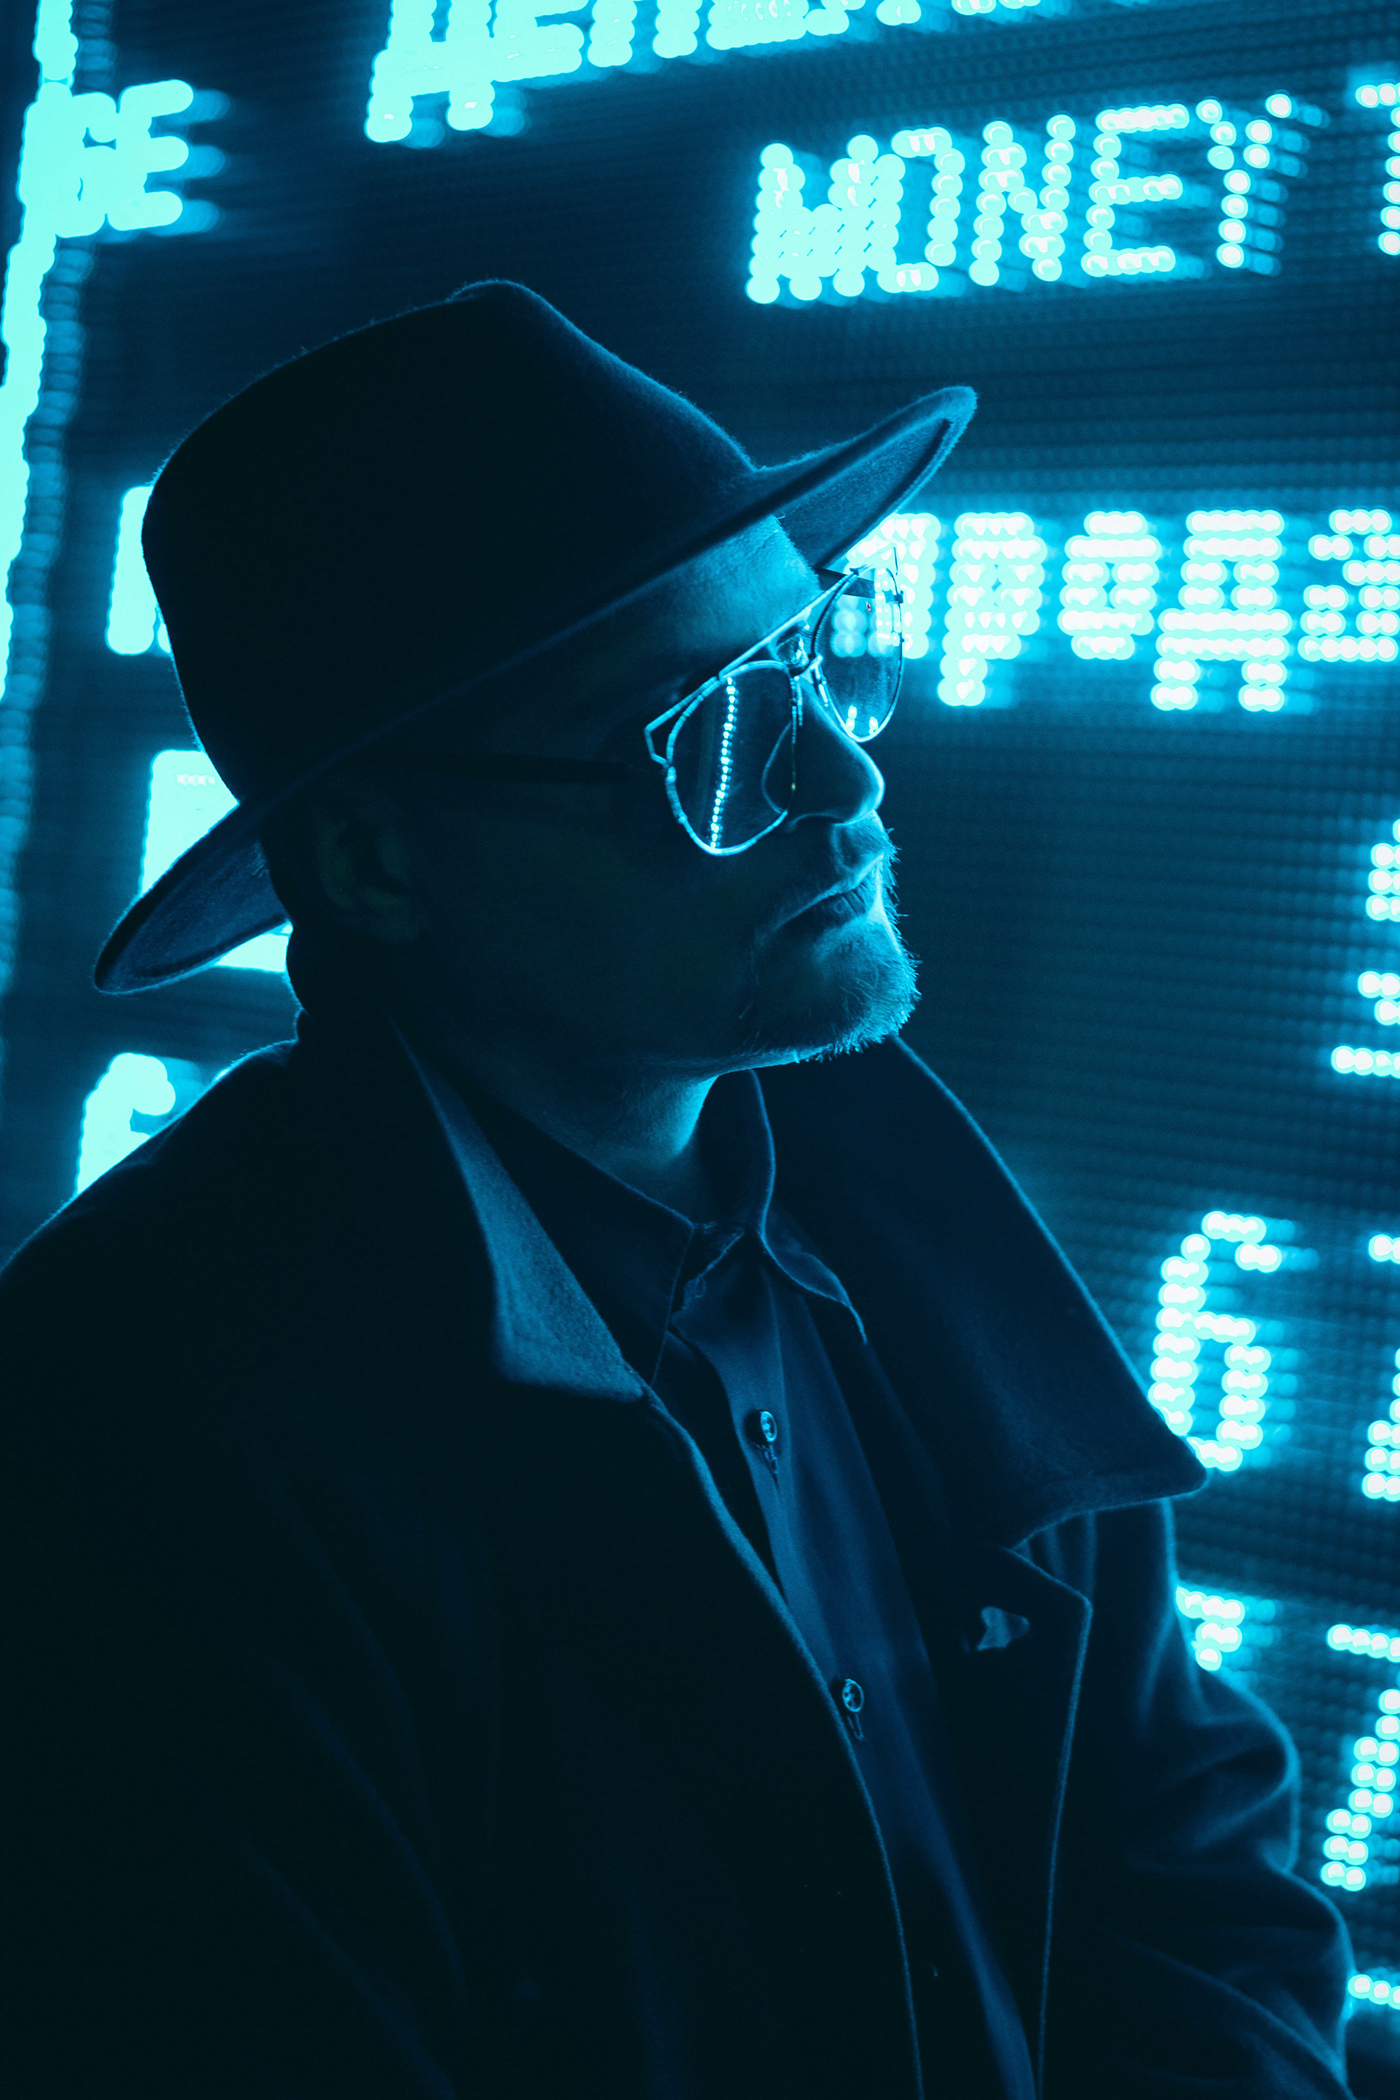 Cyber portrait by Turbolera in blue neon light. Night city. True detective noir vision